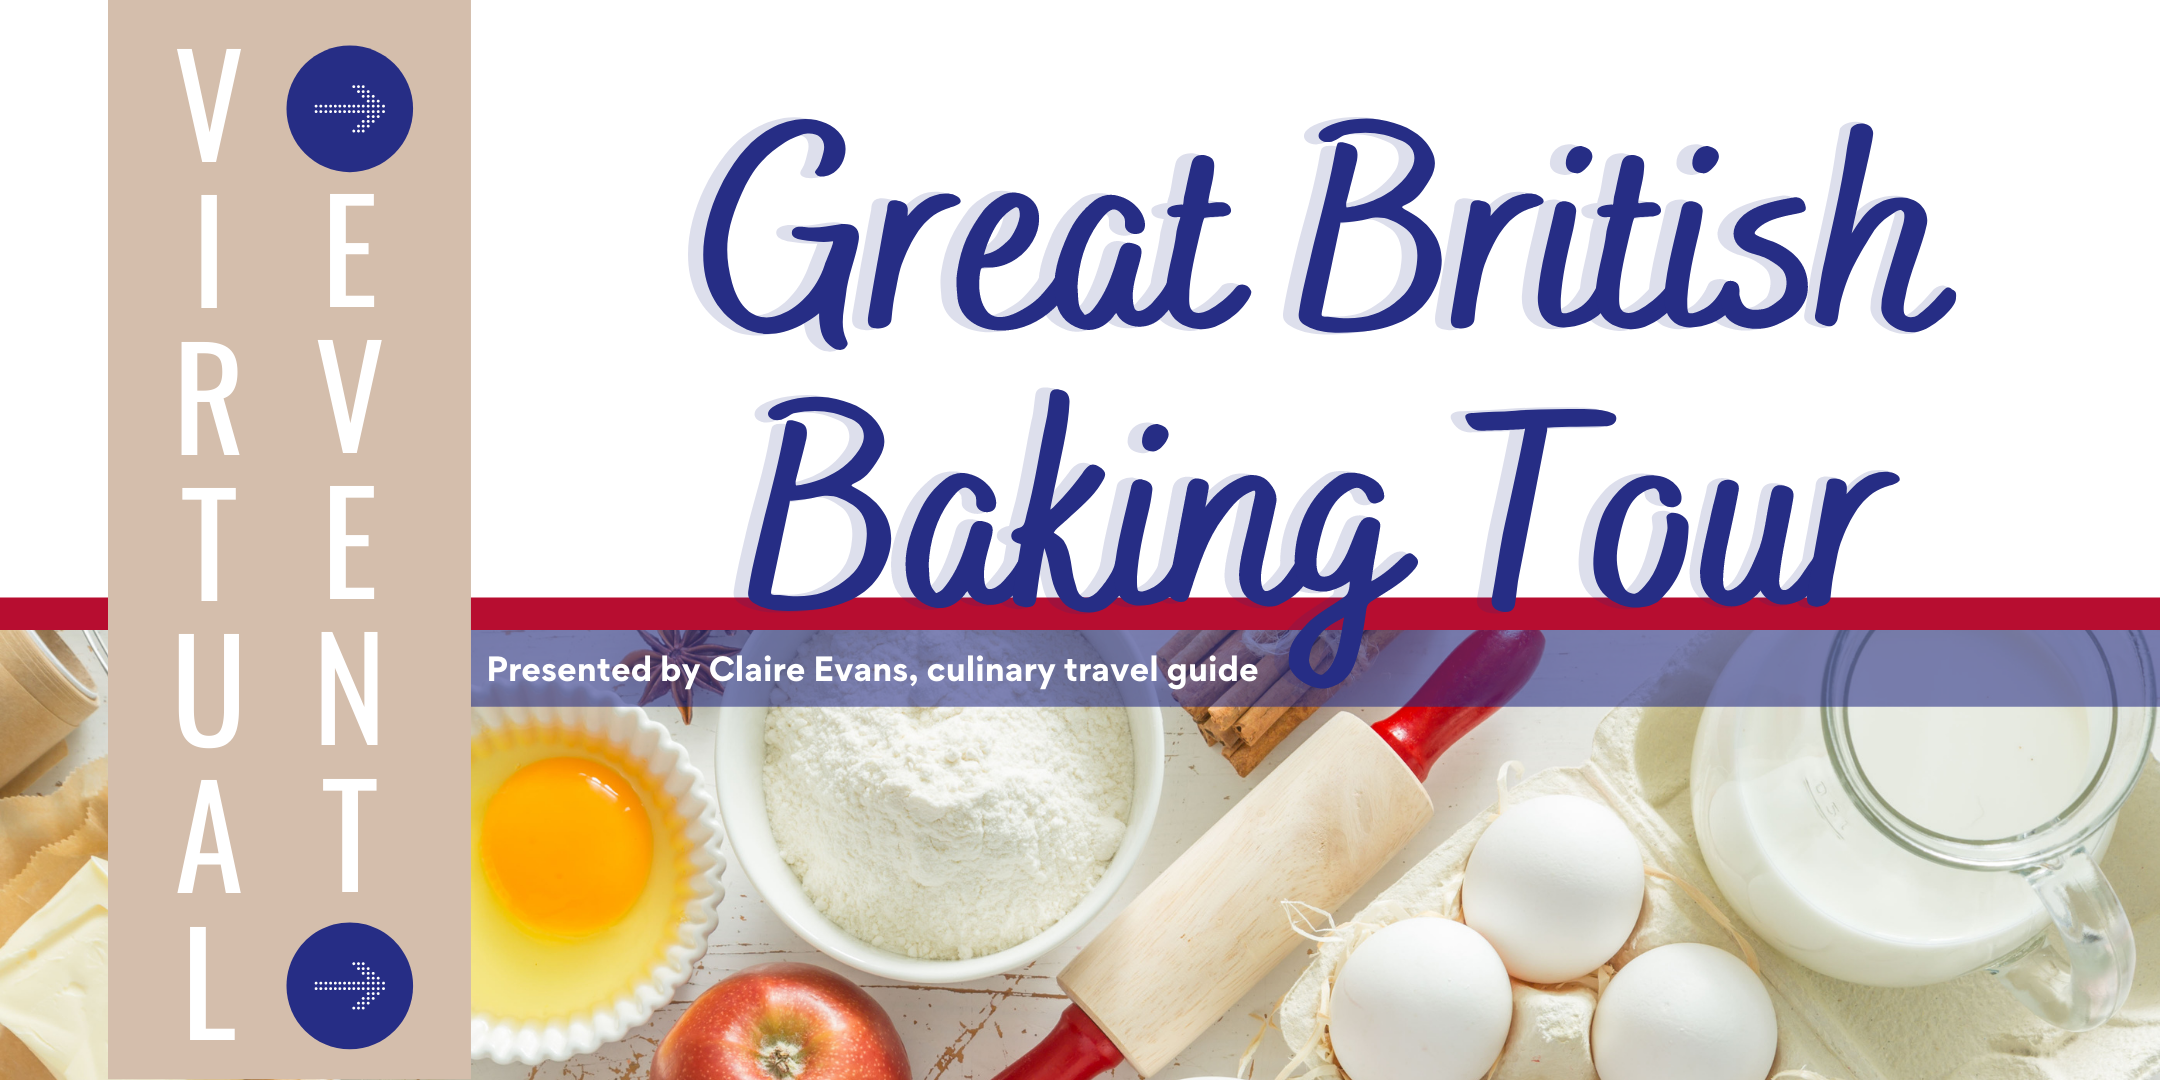 Great British Baking Tour event image